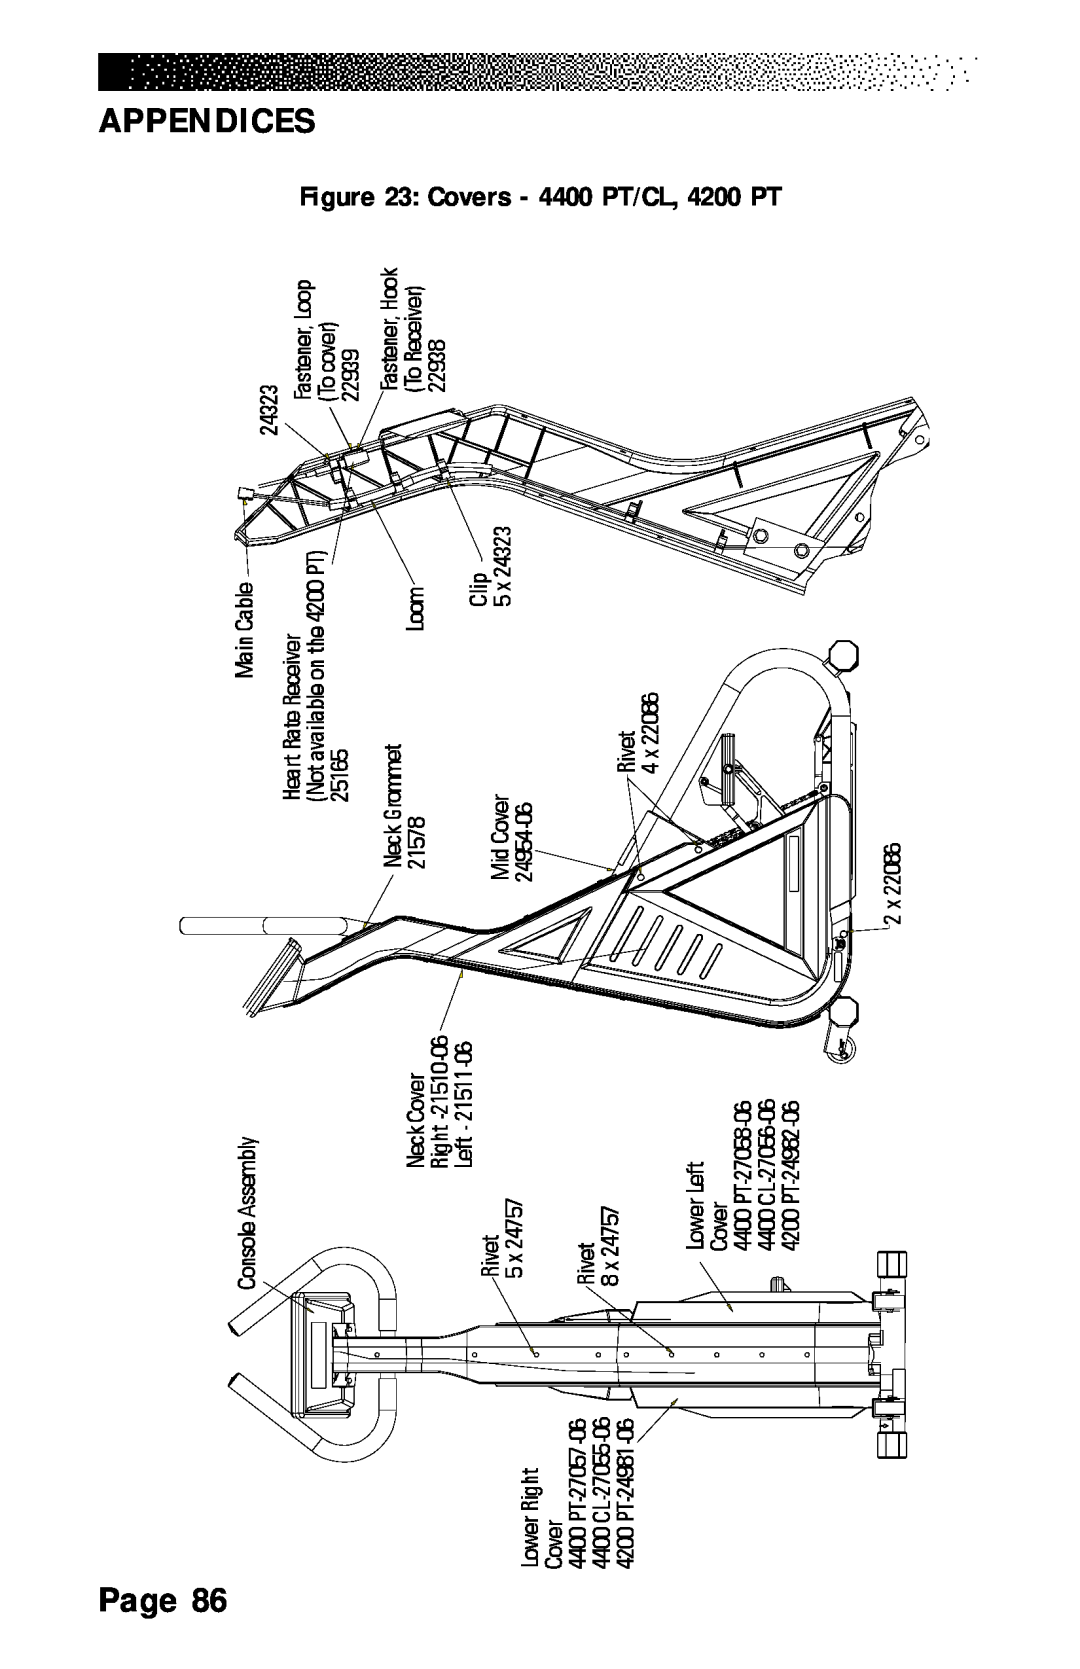 Stairmaster 4600 PT/CL manual Covers - 4400 PT/CL, 4200 PT, Appendices, Page 